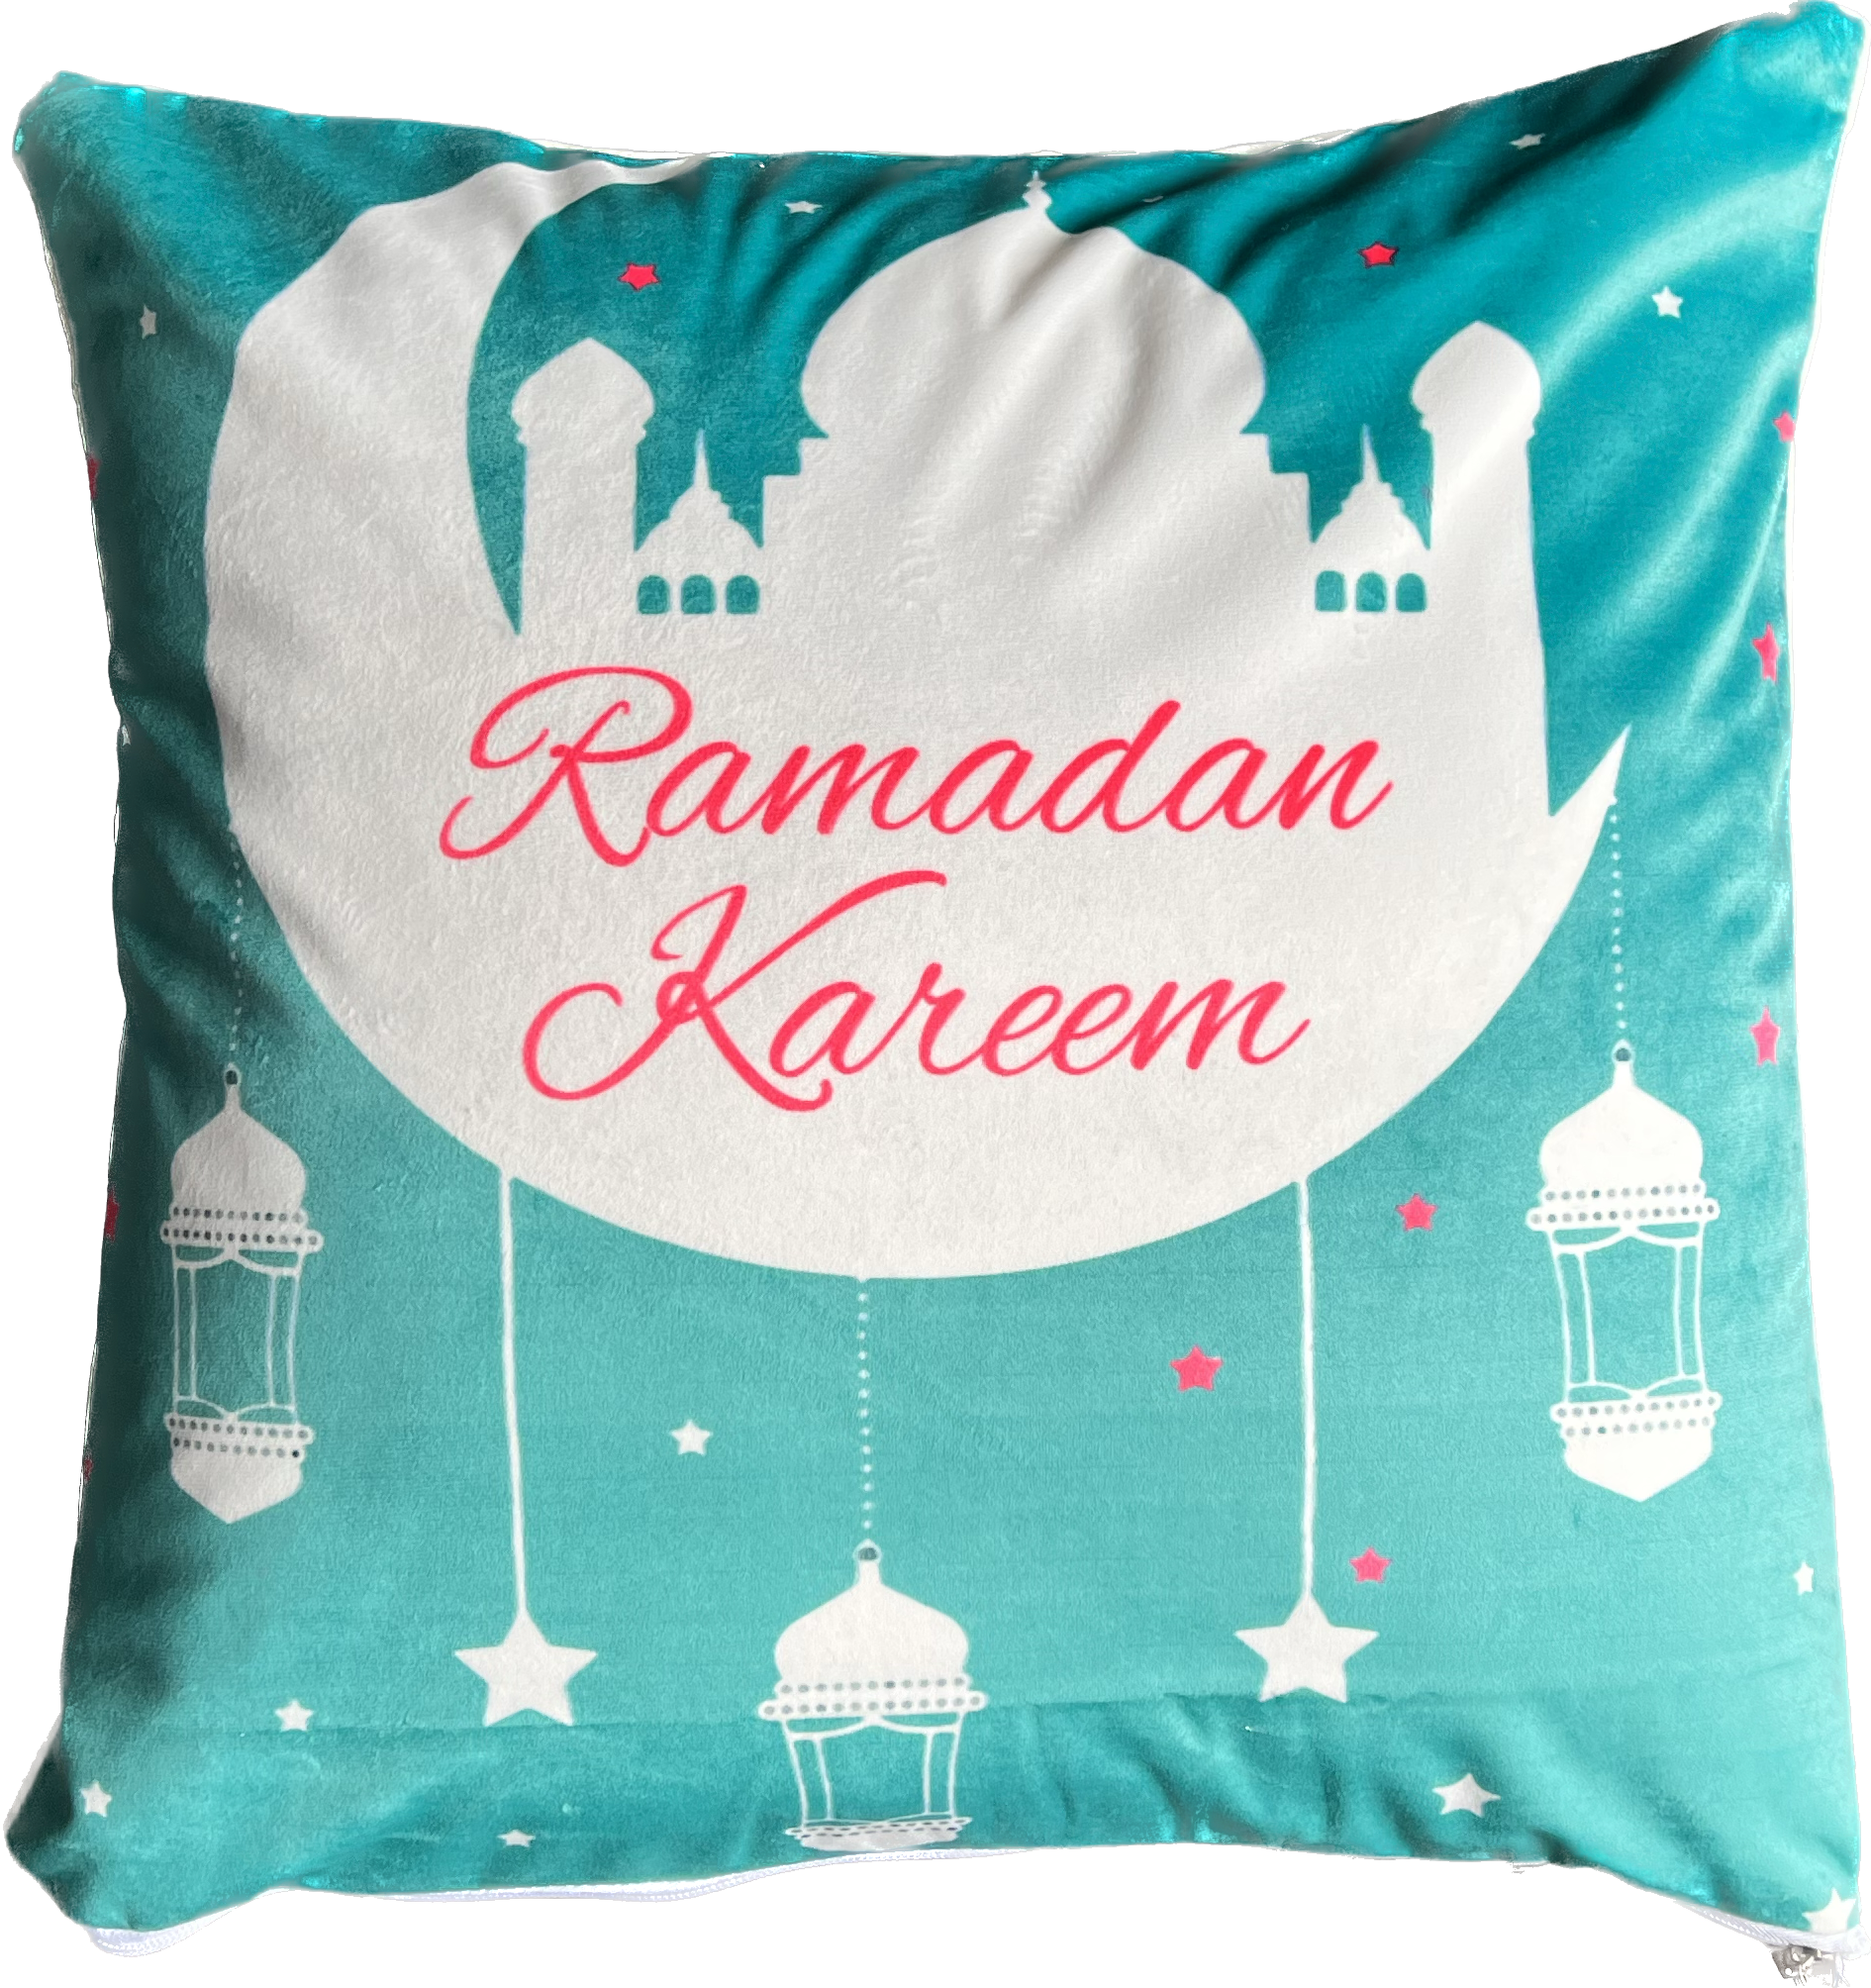 Ramadan runner & cushion set - Colorful